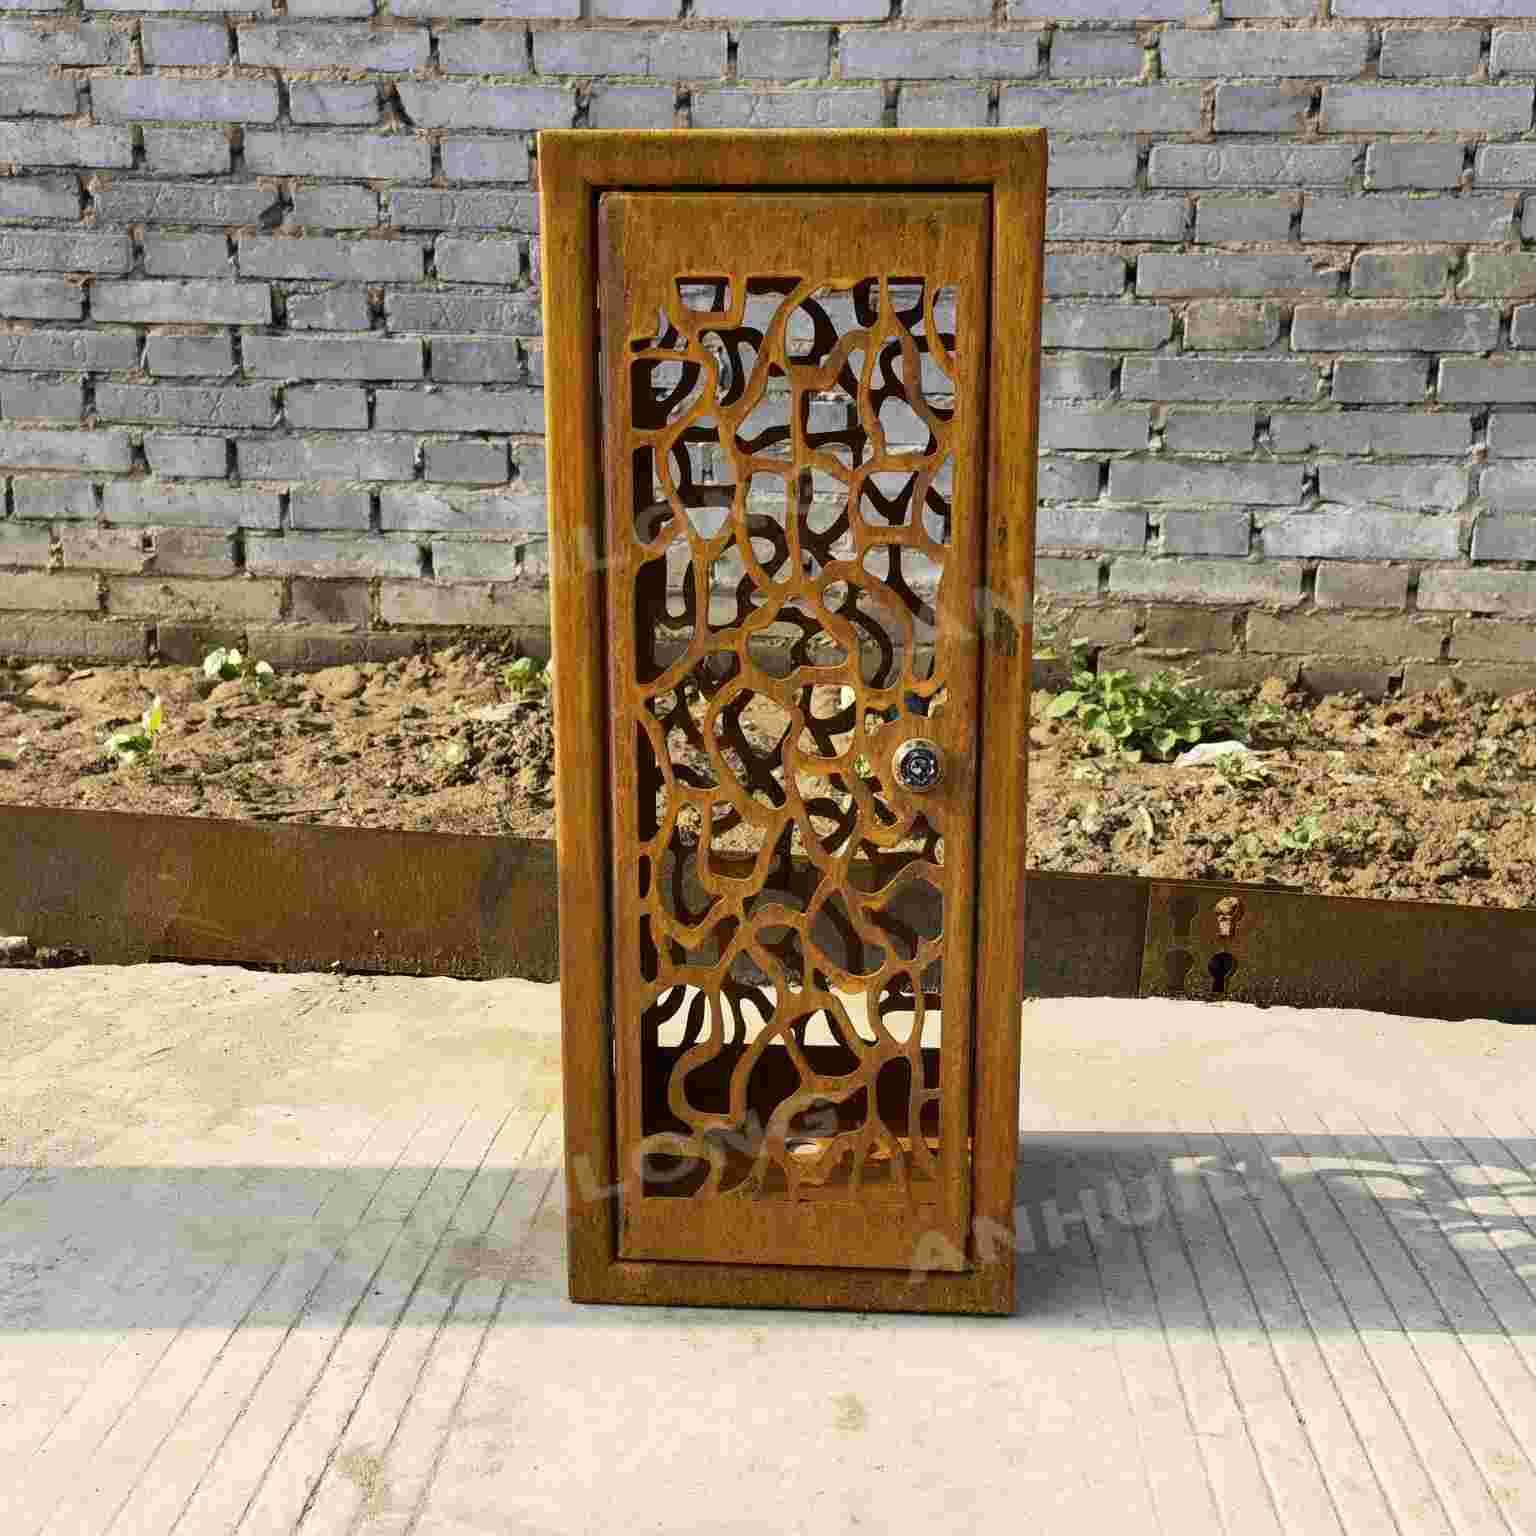 Rustic-style corten lightbox for courtyard lighting